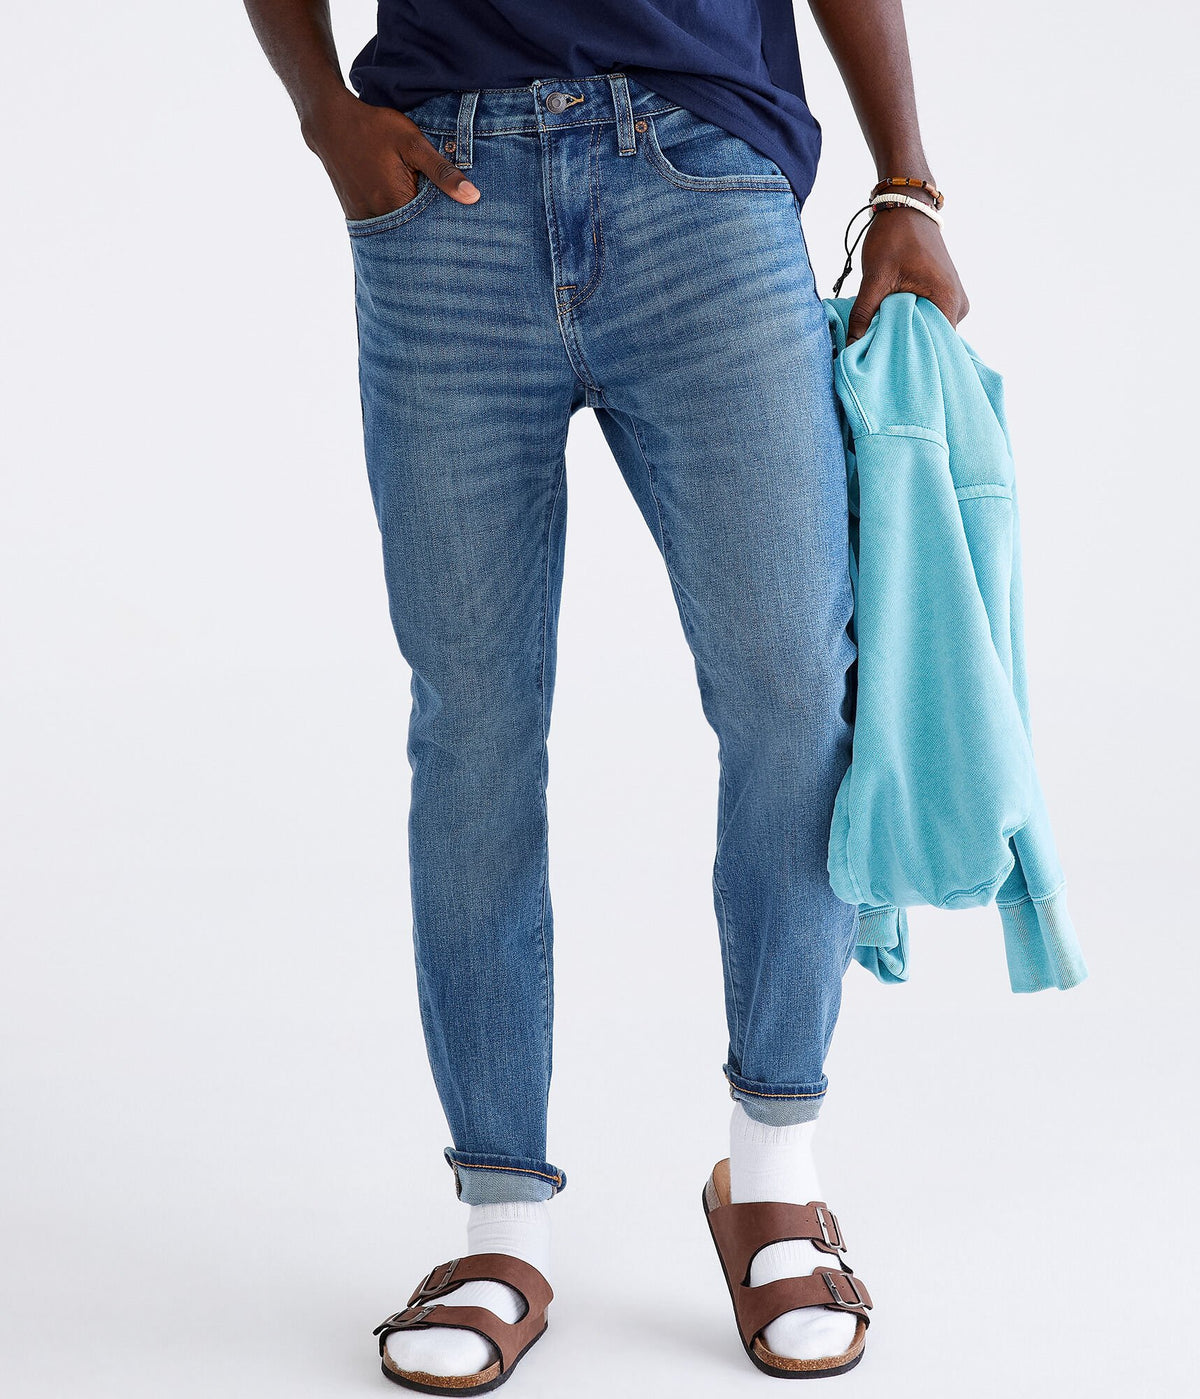 Aeropostale Mens' Super Skinny Performance Jean with TruTemp365 Technology - Washed Denim - Size 36X30 - Cotton - Teen Fashion & Clothing Medium Wash